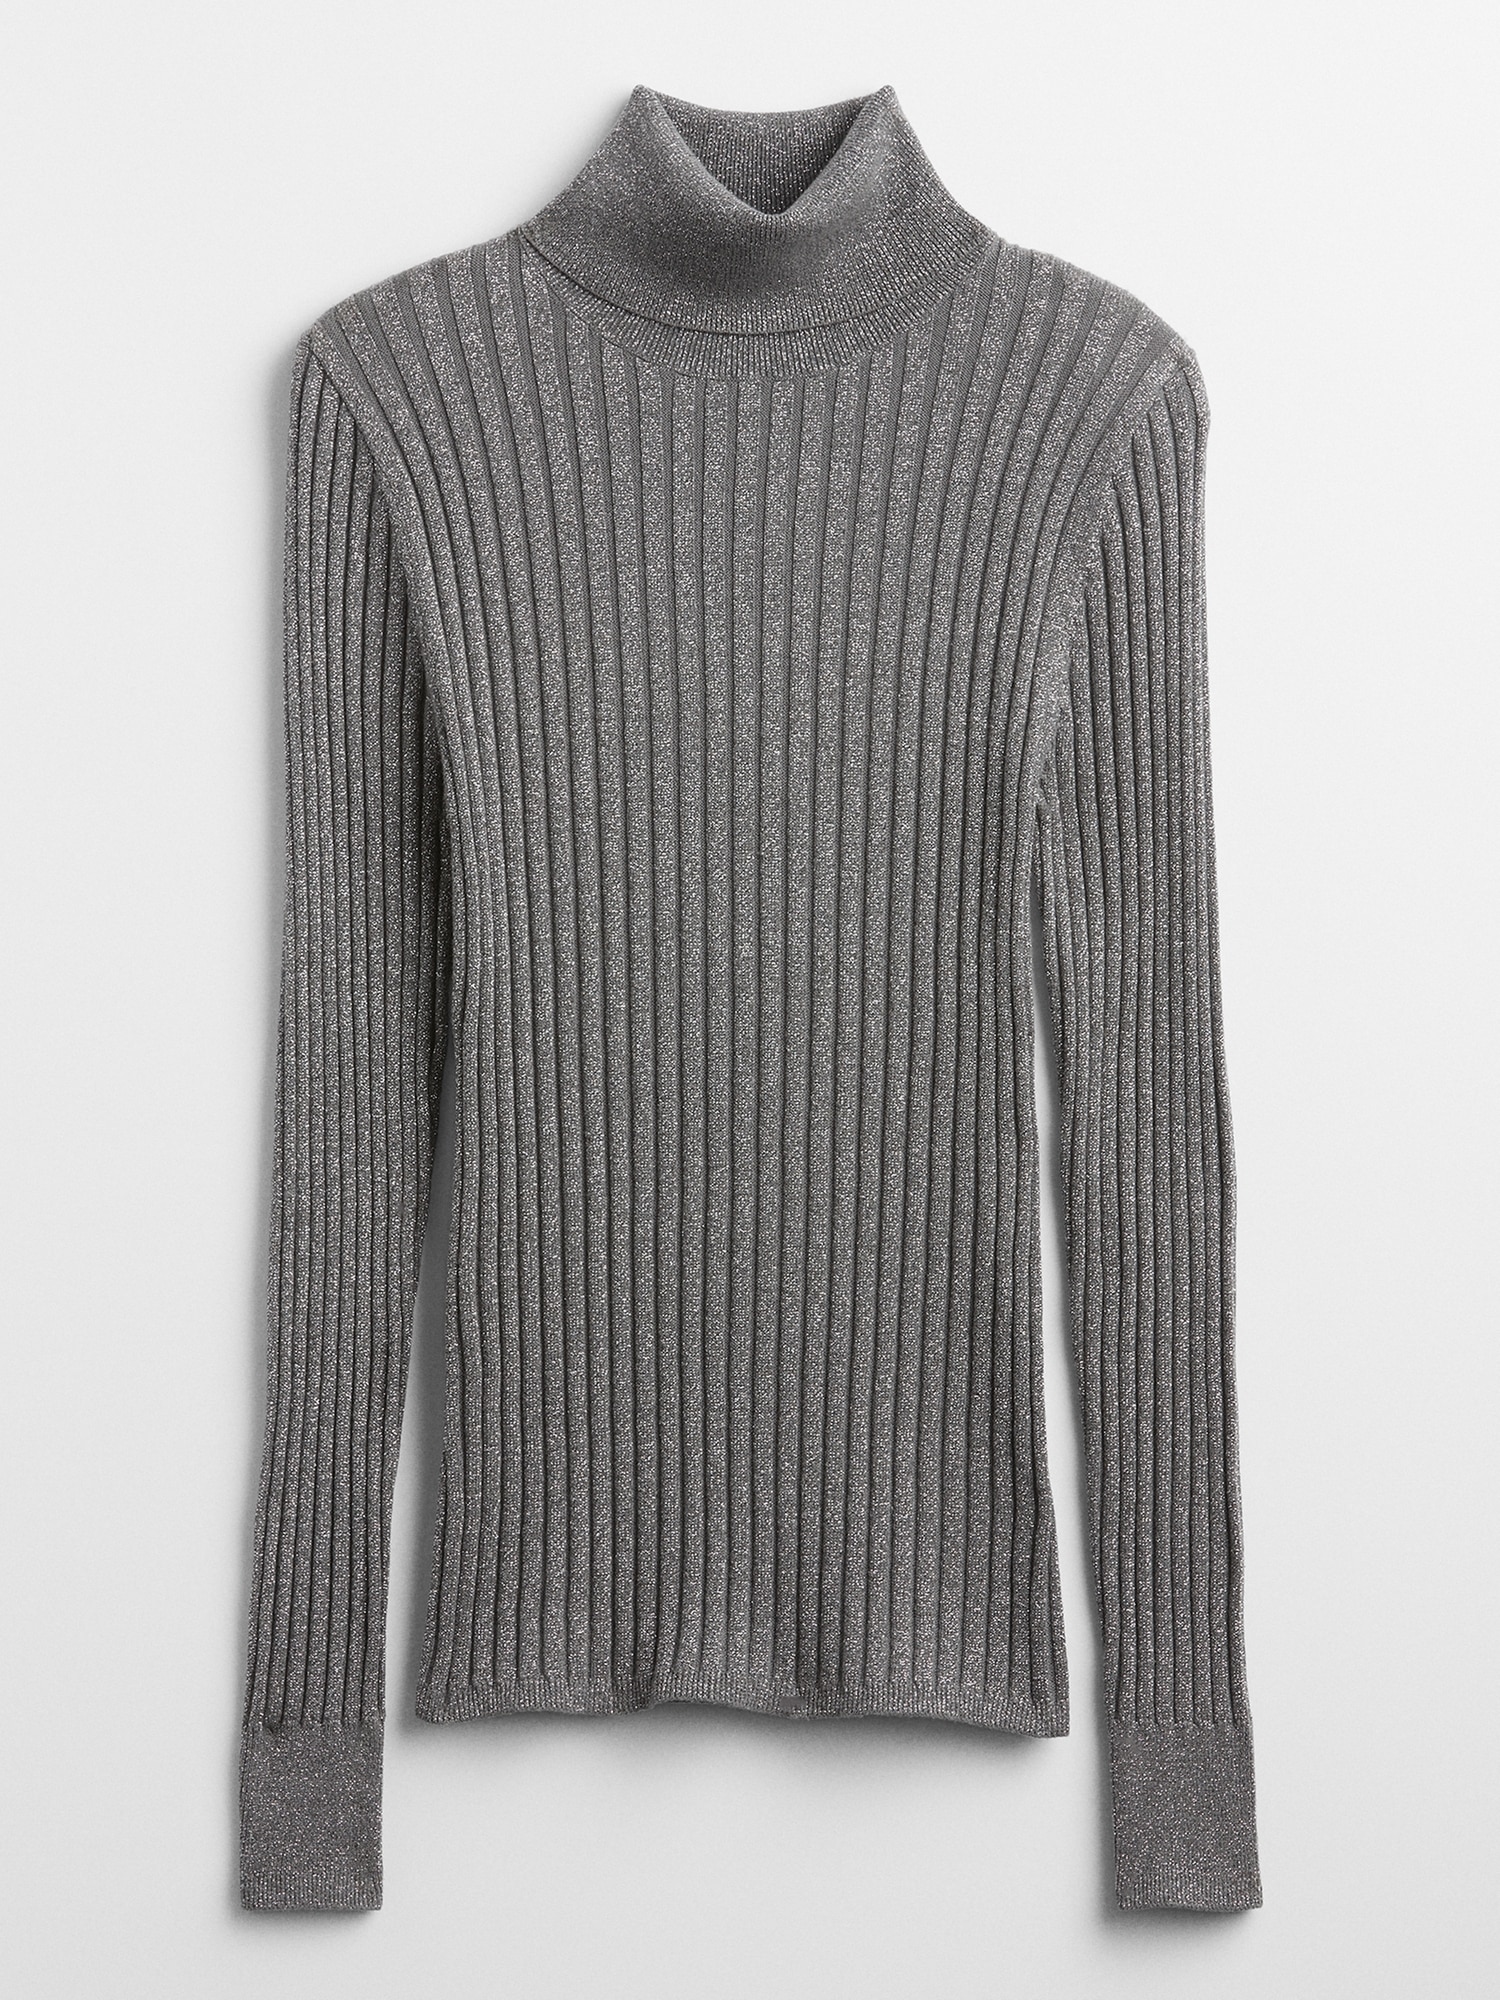  Grey Turtleneck Sweater